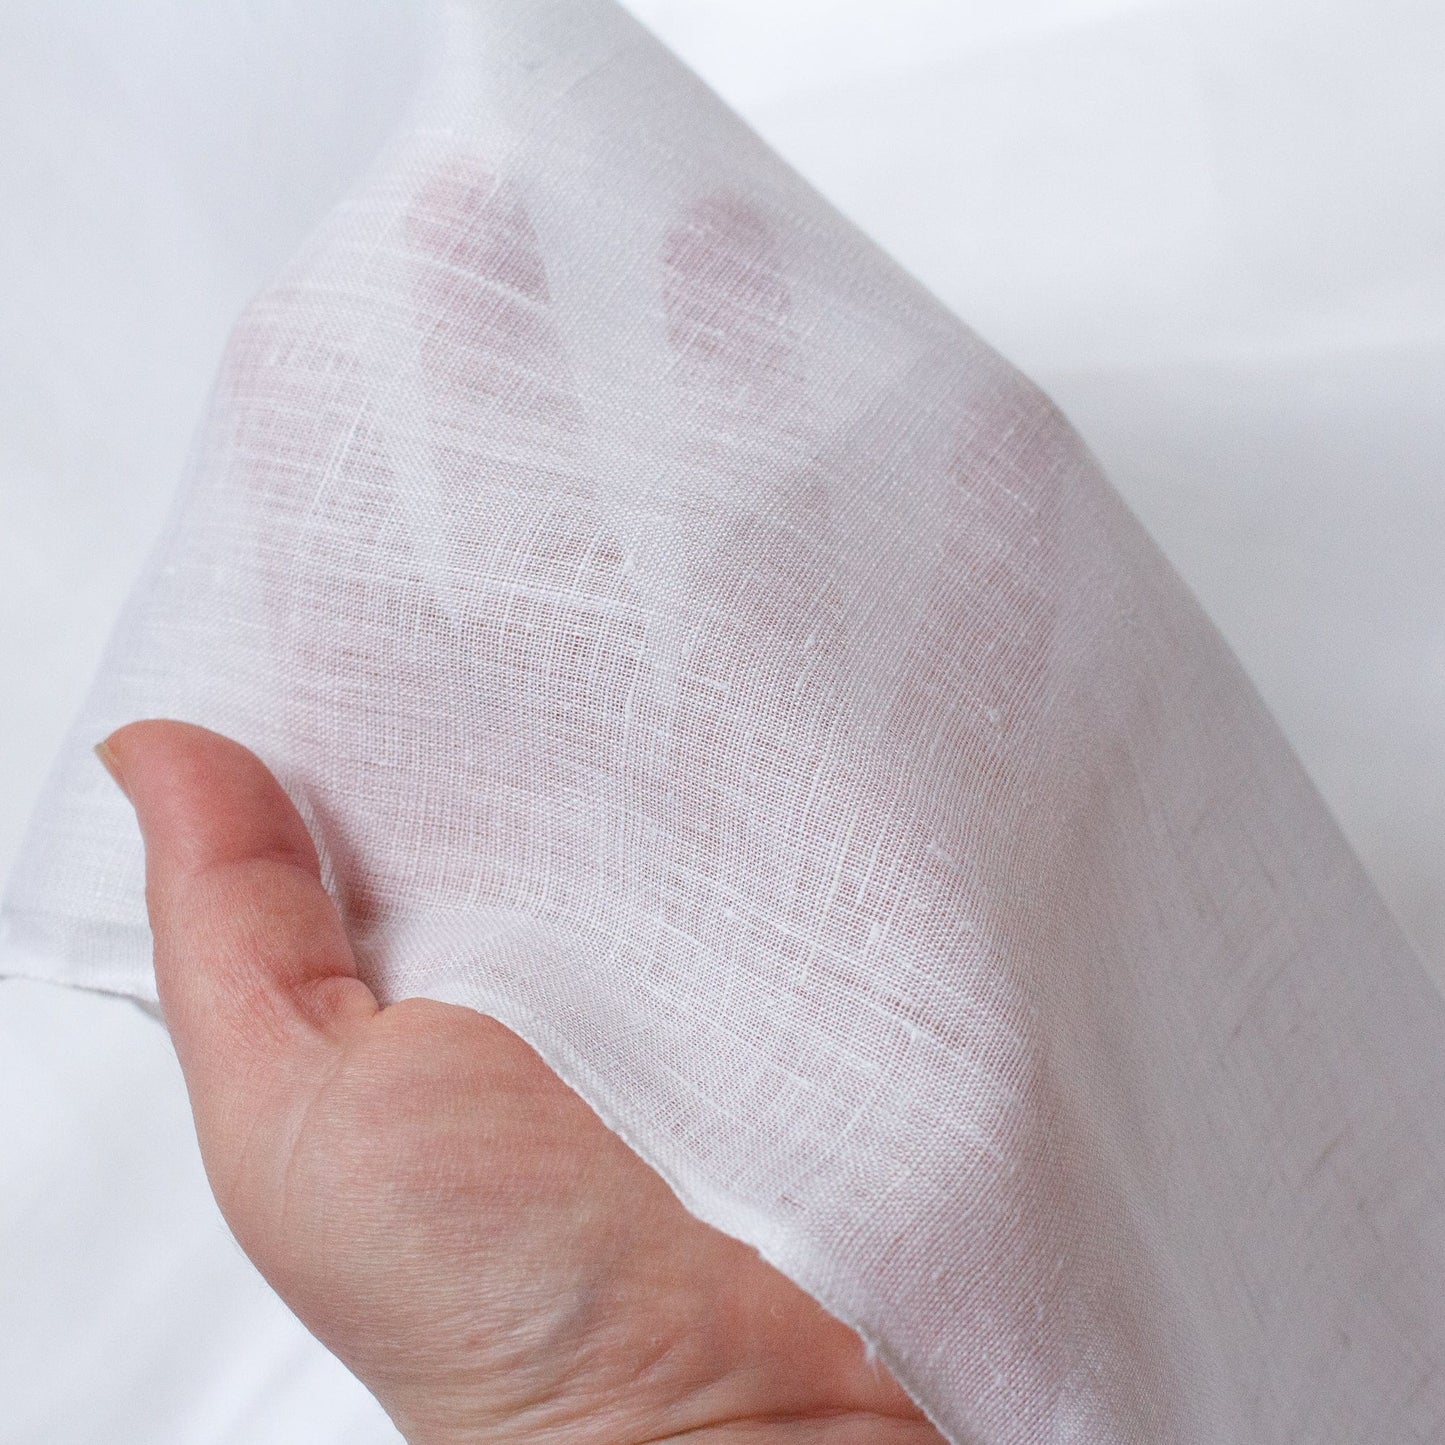 Handwoven White Linen - Lightweight